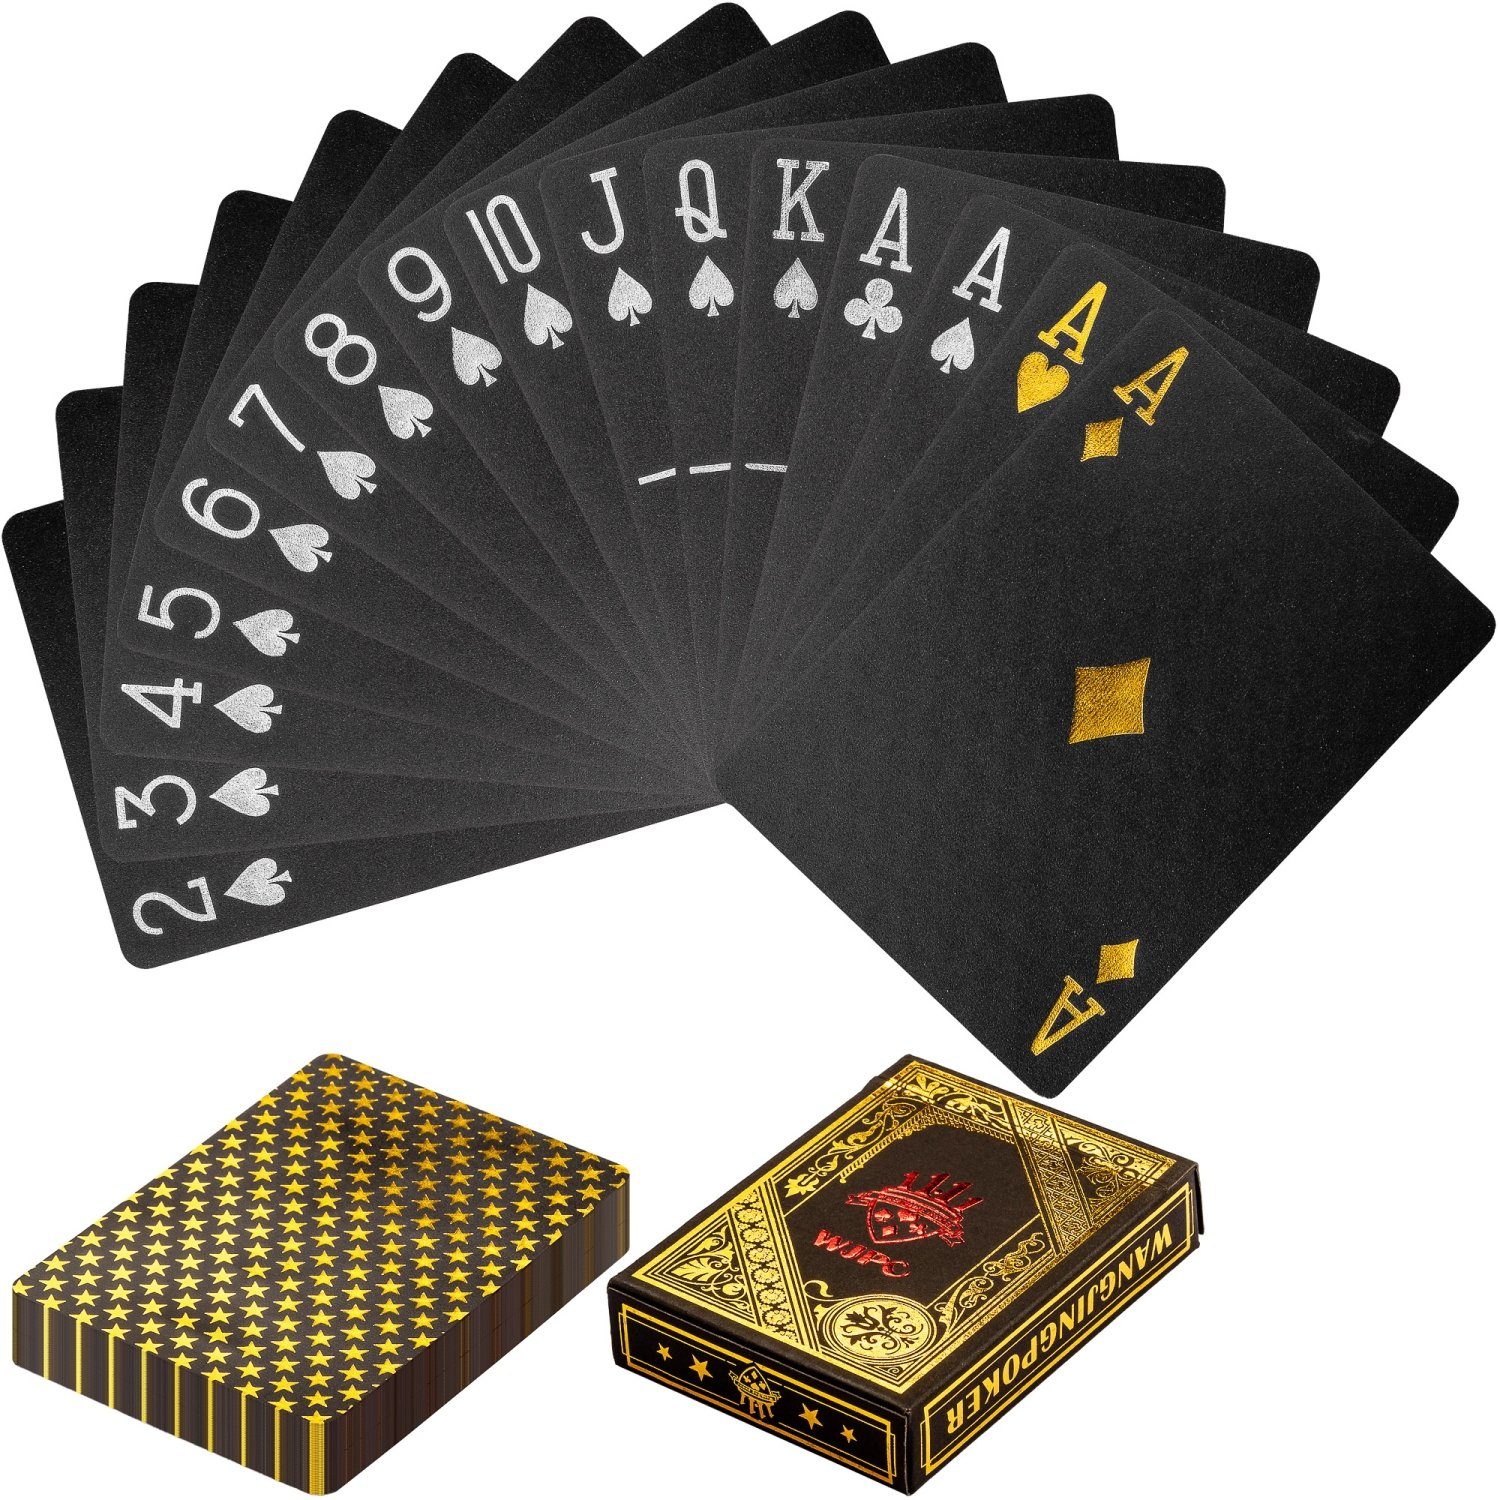 GAMES PLANET Spielesammlung, Games Planet® Design Pokerkarten aus Kunststoff, Varianten: Gold / Black Gold / Black Silver, Poker Plastik Spielkarten Schwarz - Gold